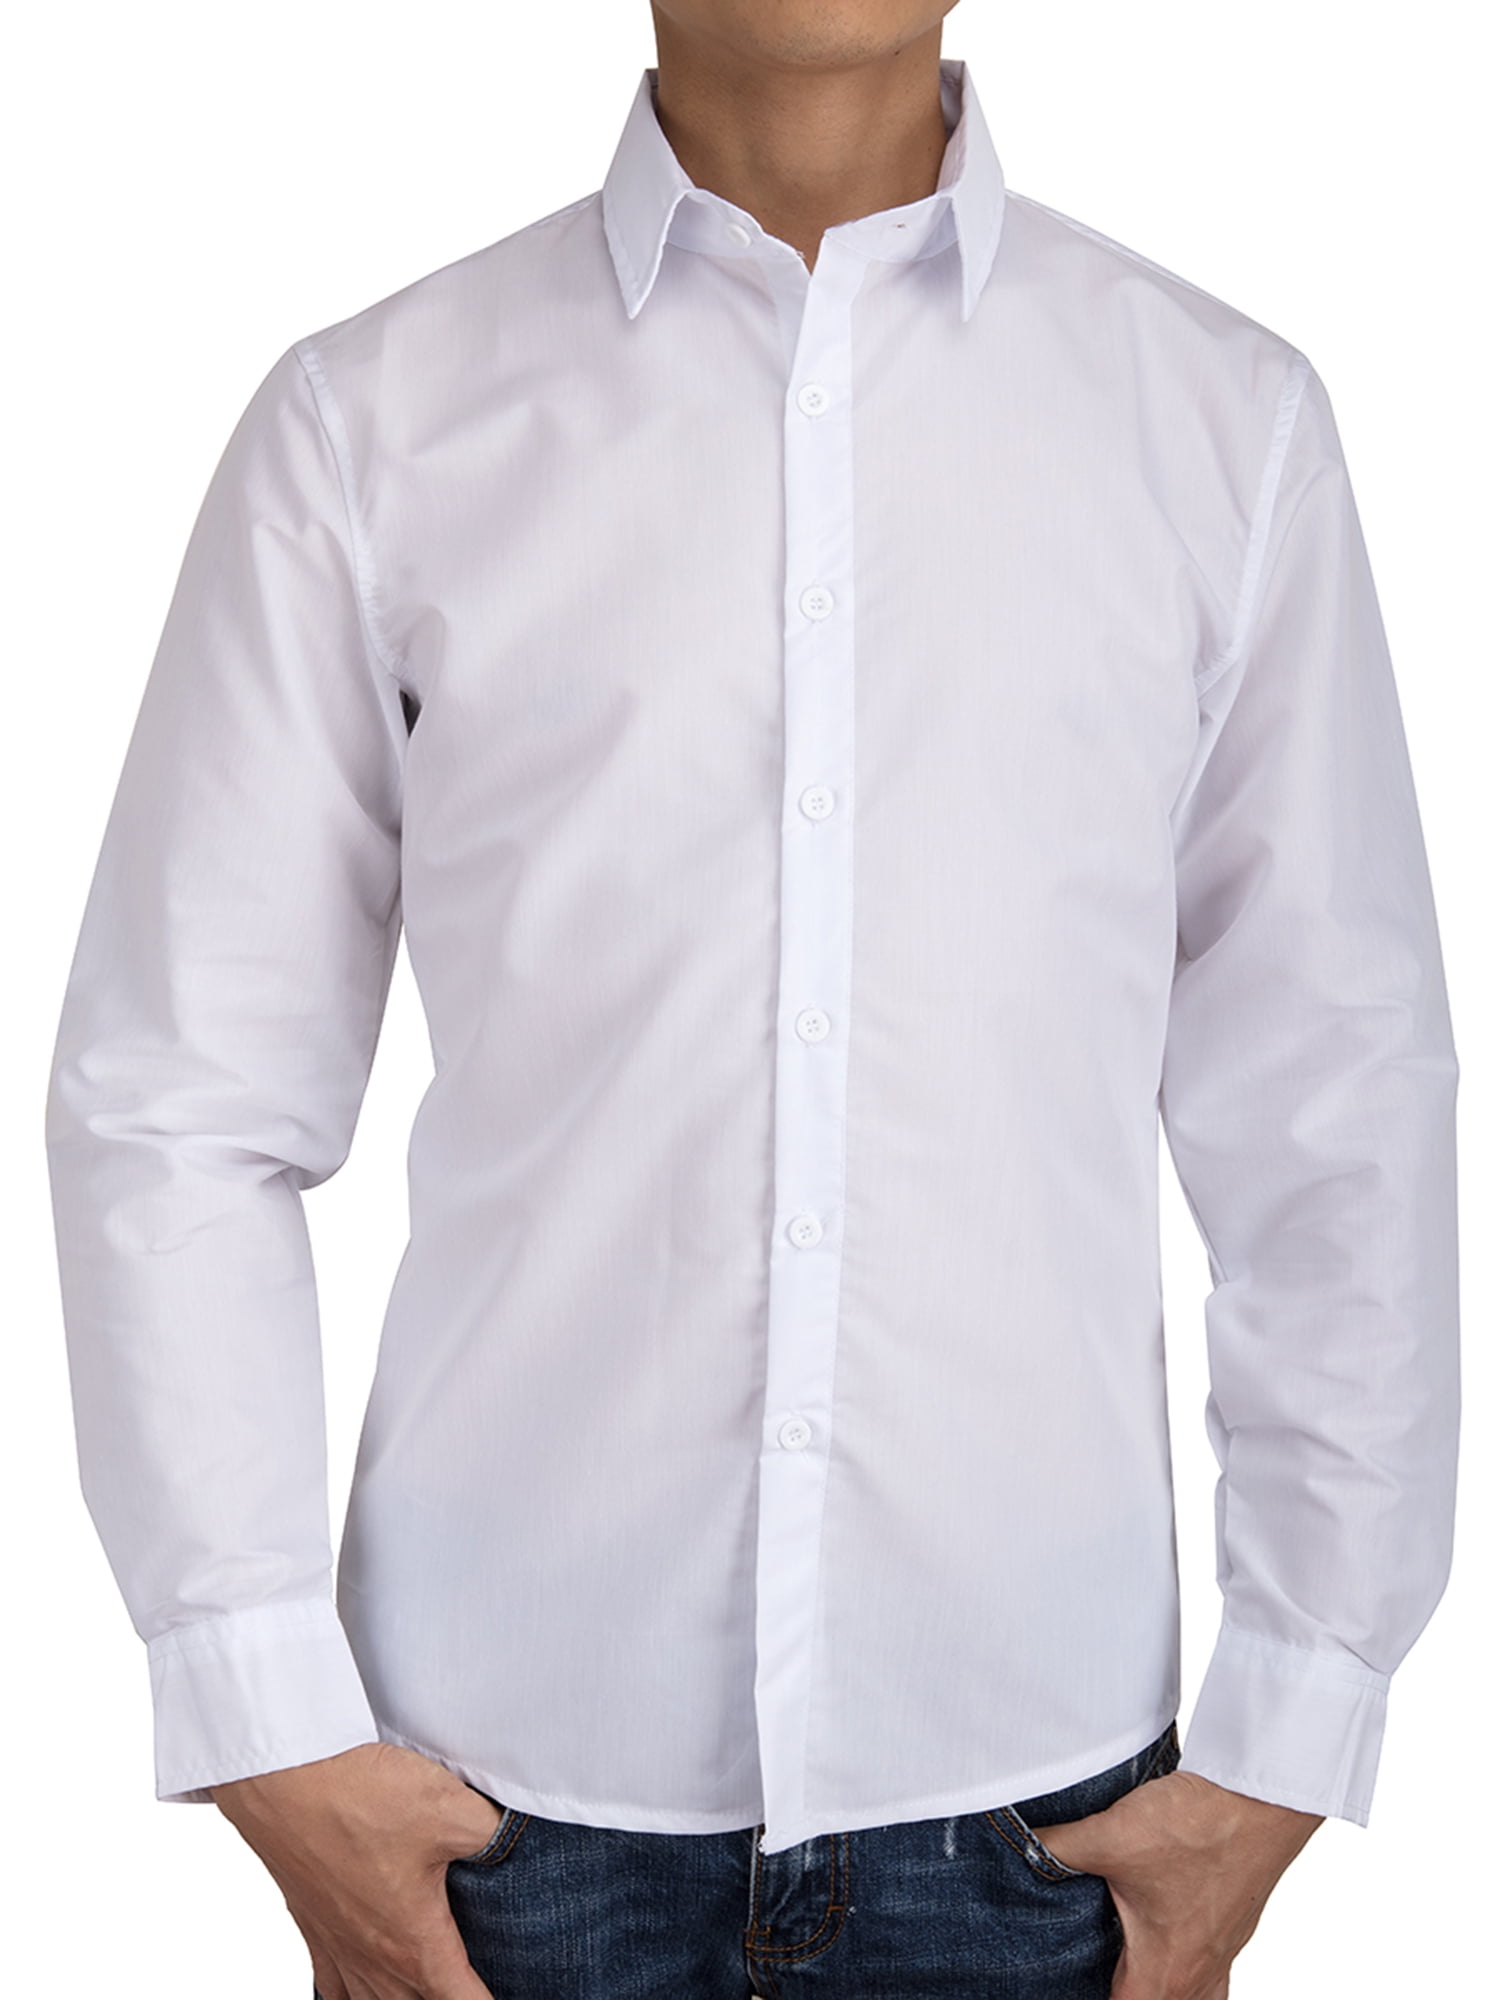 mens white dress shirts walmart